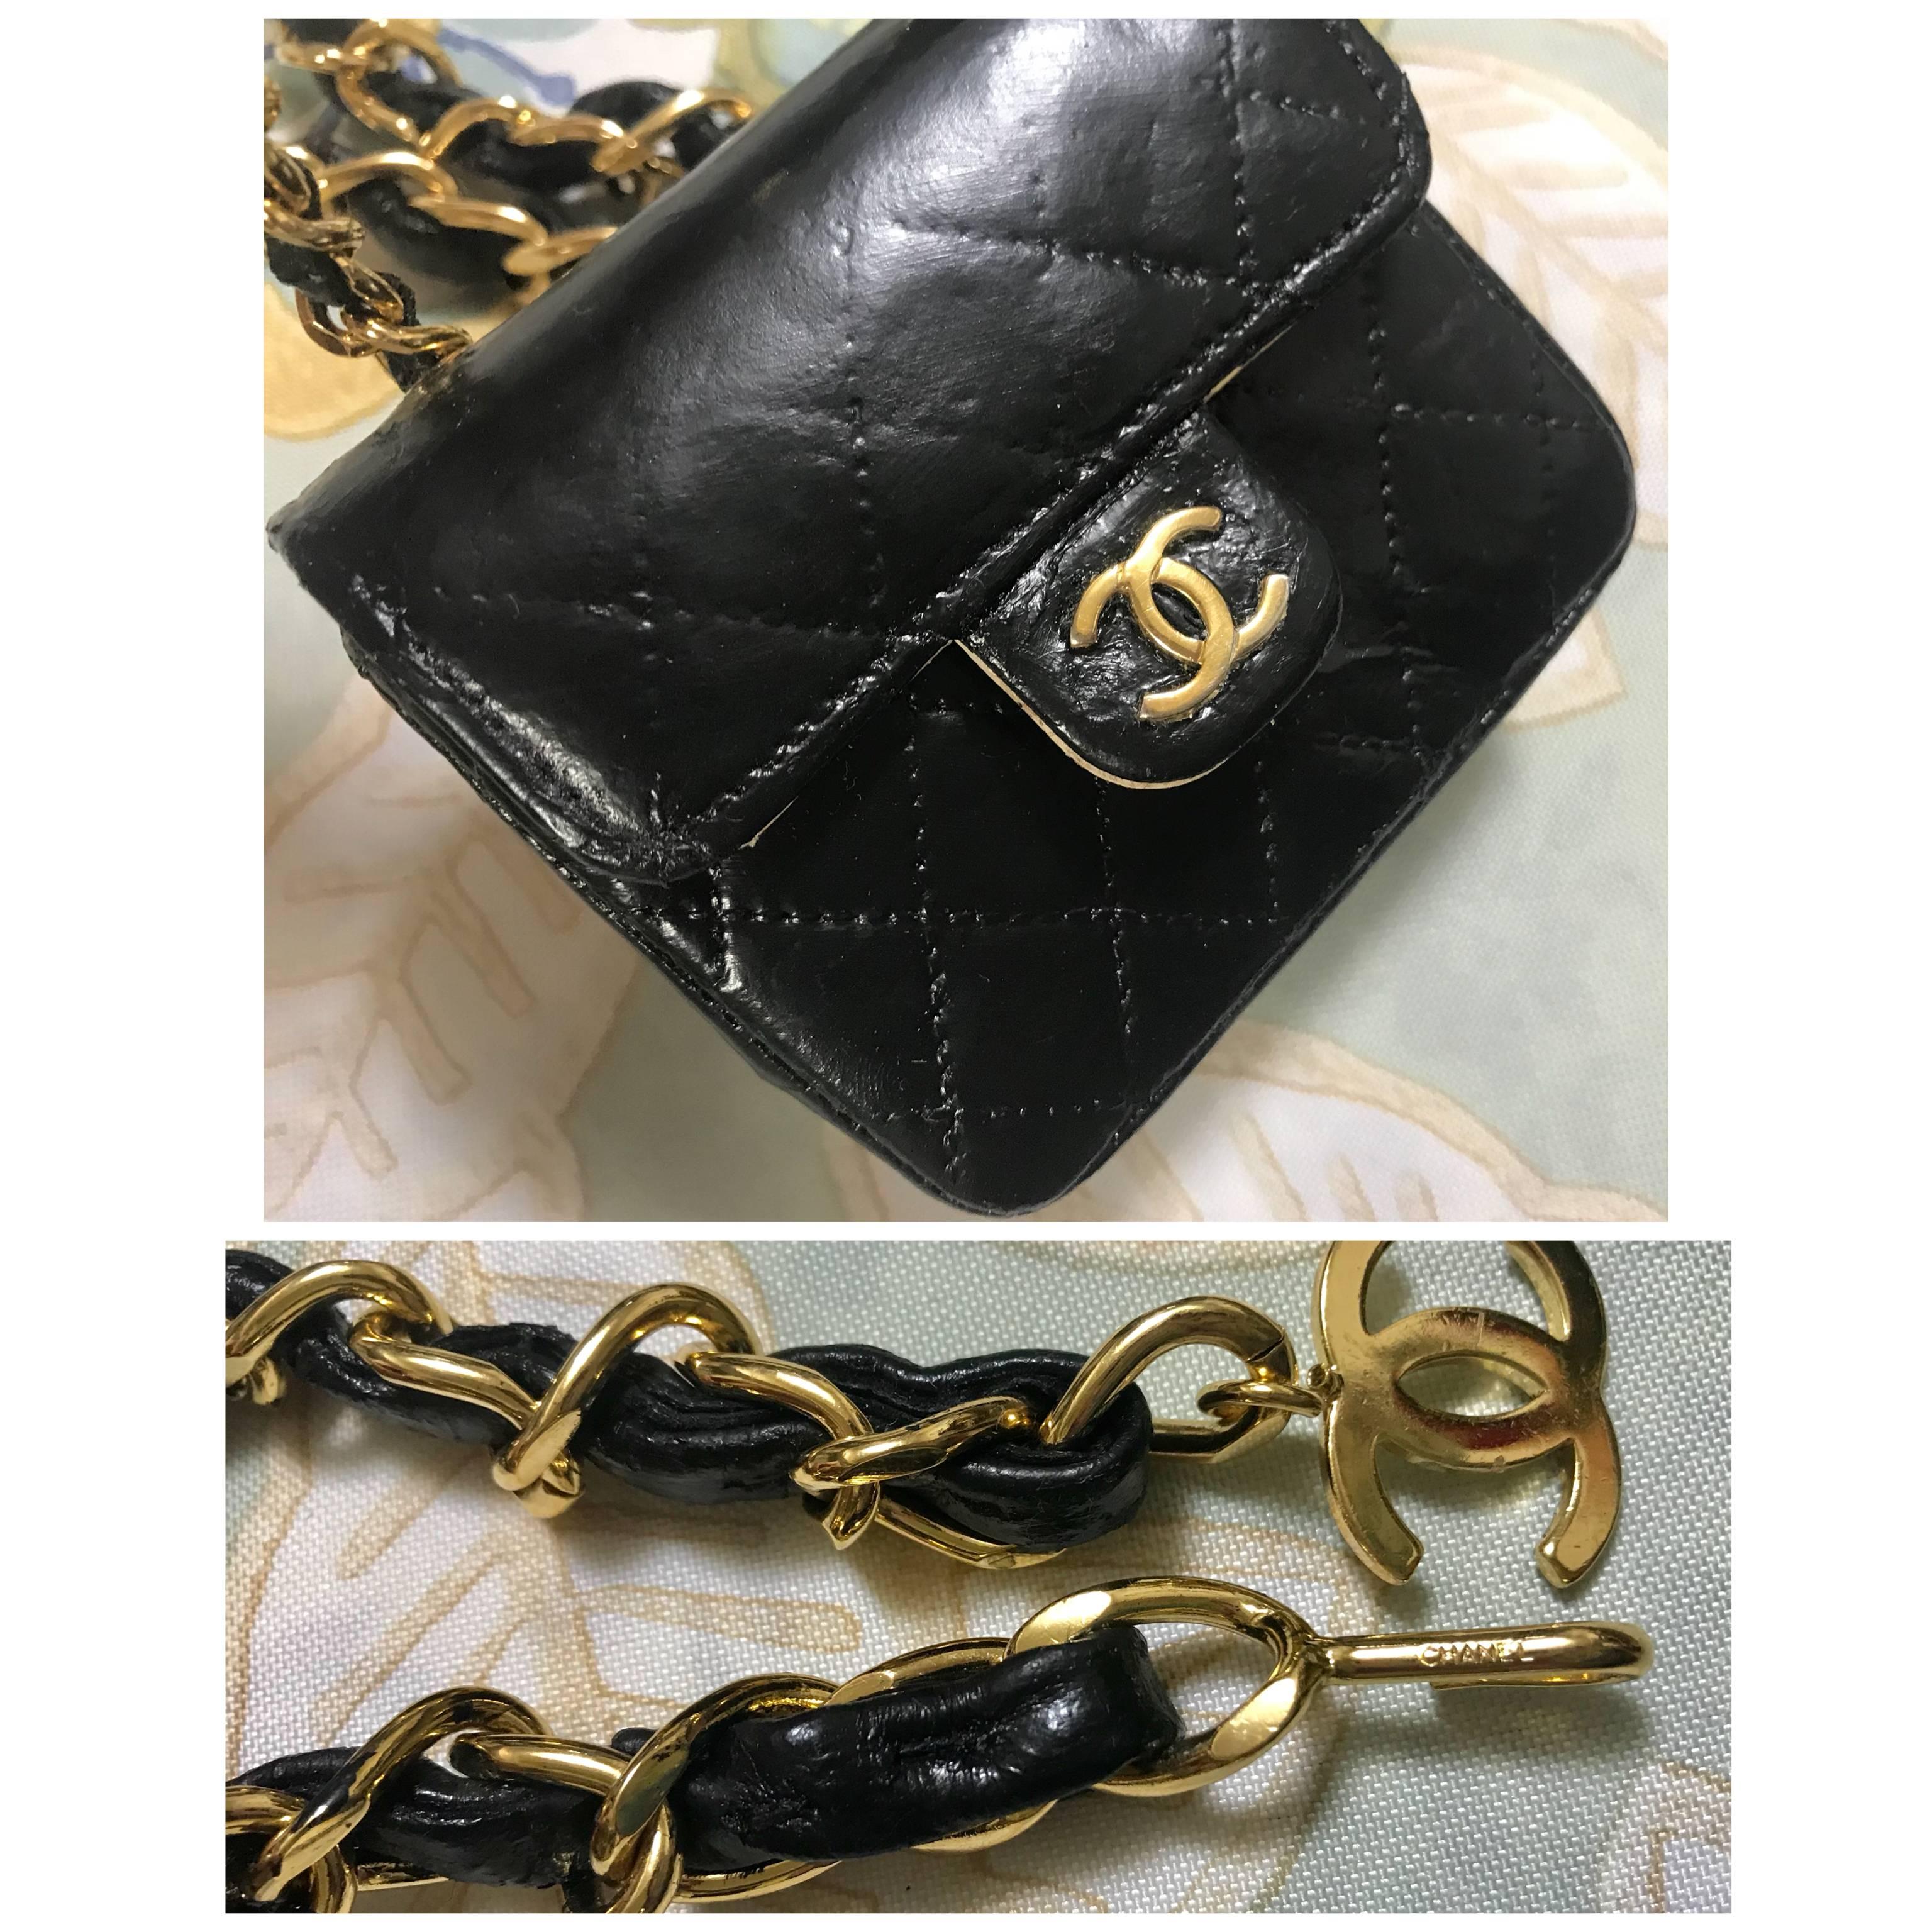 Black Vintage CHANEL mini 2.55 bag charm chain leather belt with golden CC charm.